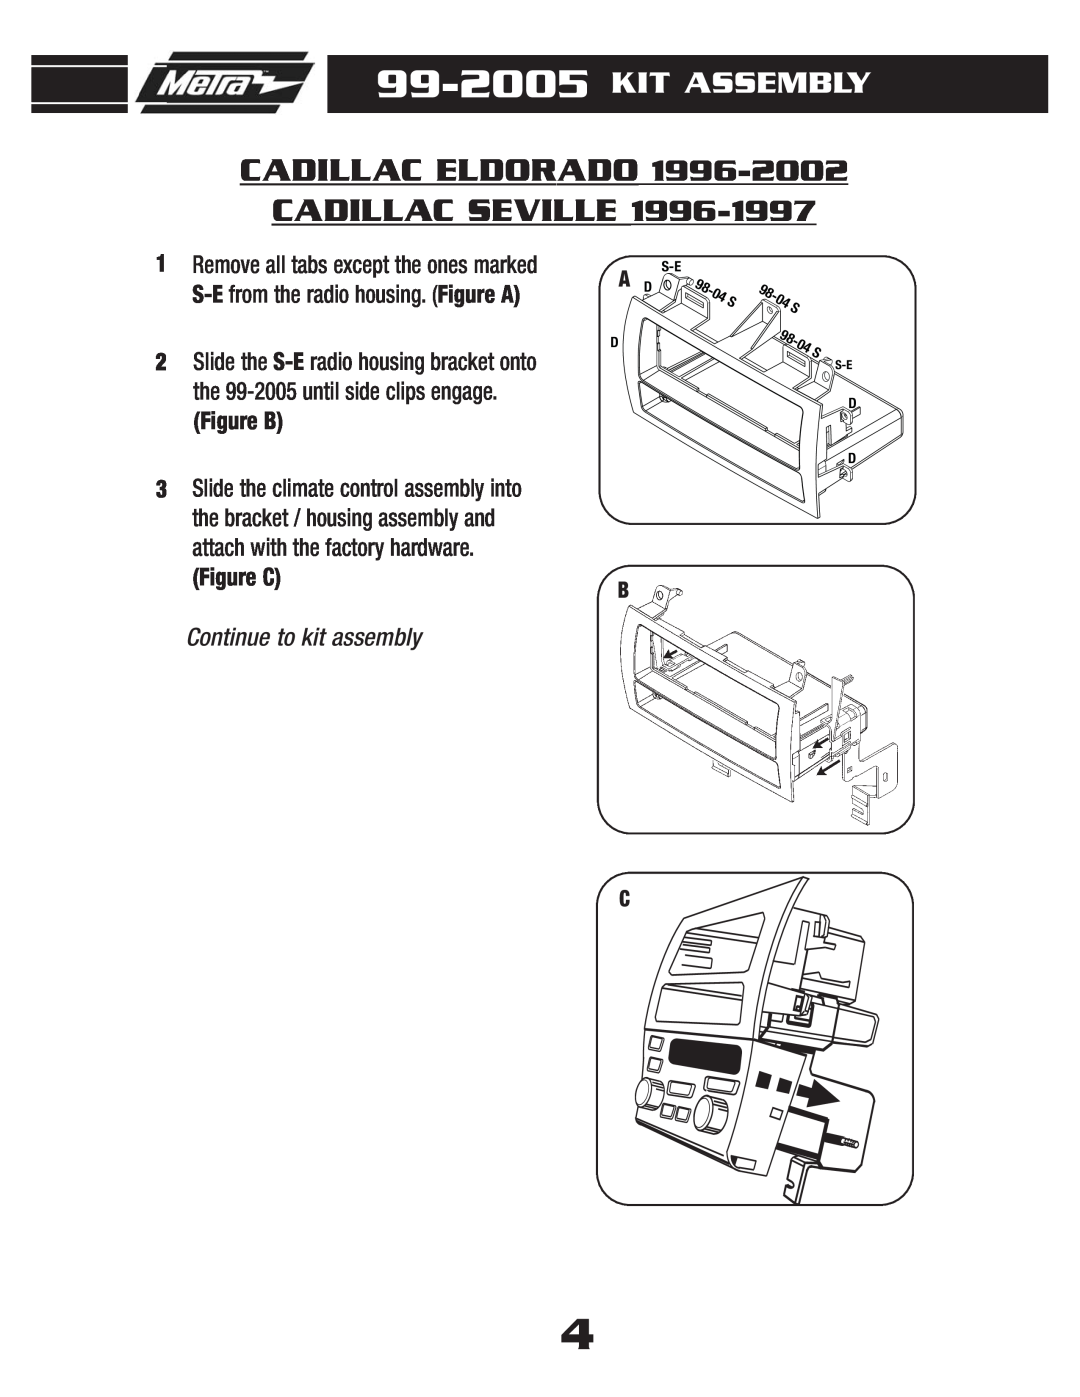 Metra Electronics 99-2005 Kit Assembly, Cadillac Eldorado Cadillac Seville, Continue to kit assembly 